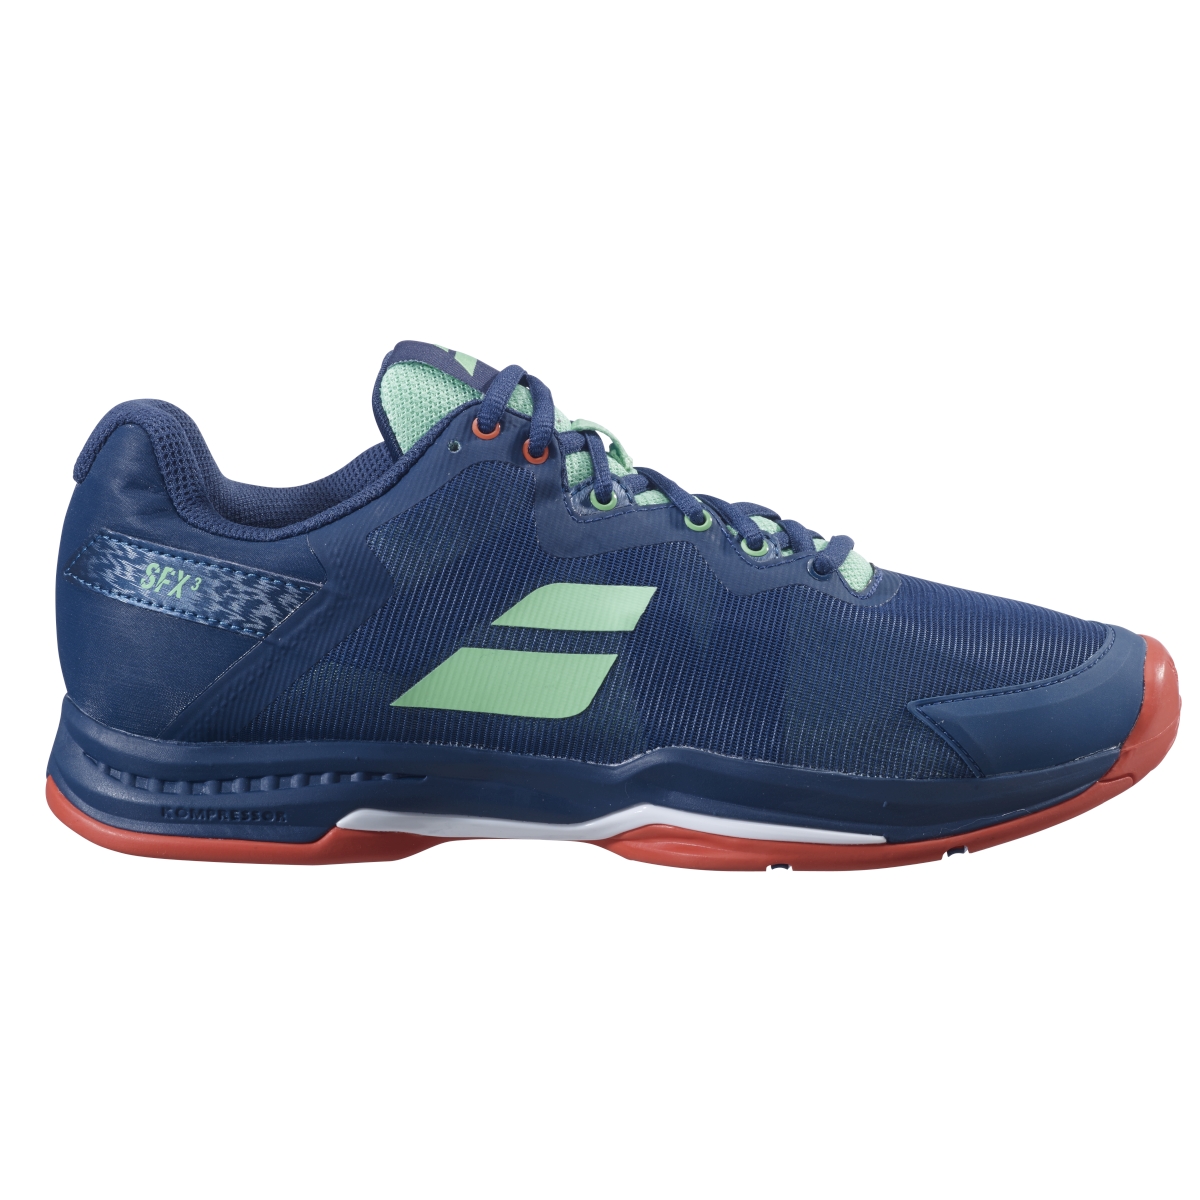 Babolat Men's SFX3 All Court Tennis Shoes (Majolica Blue)